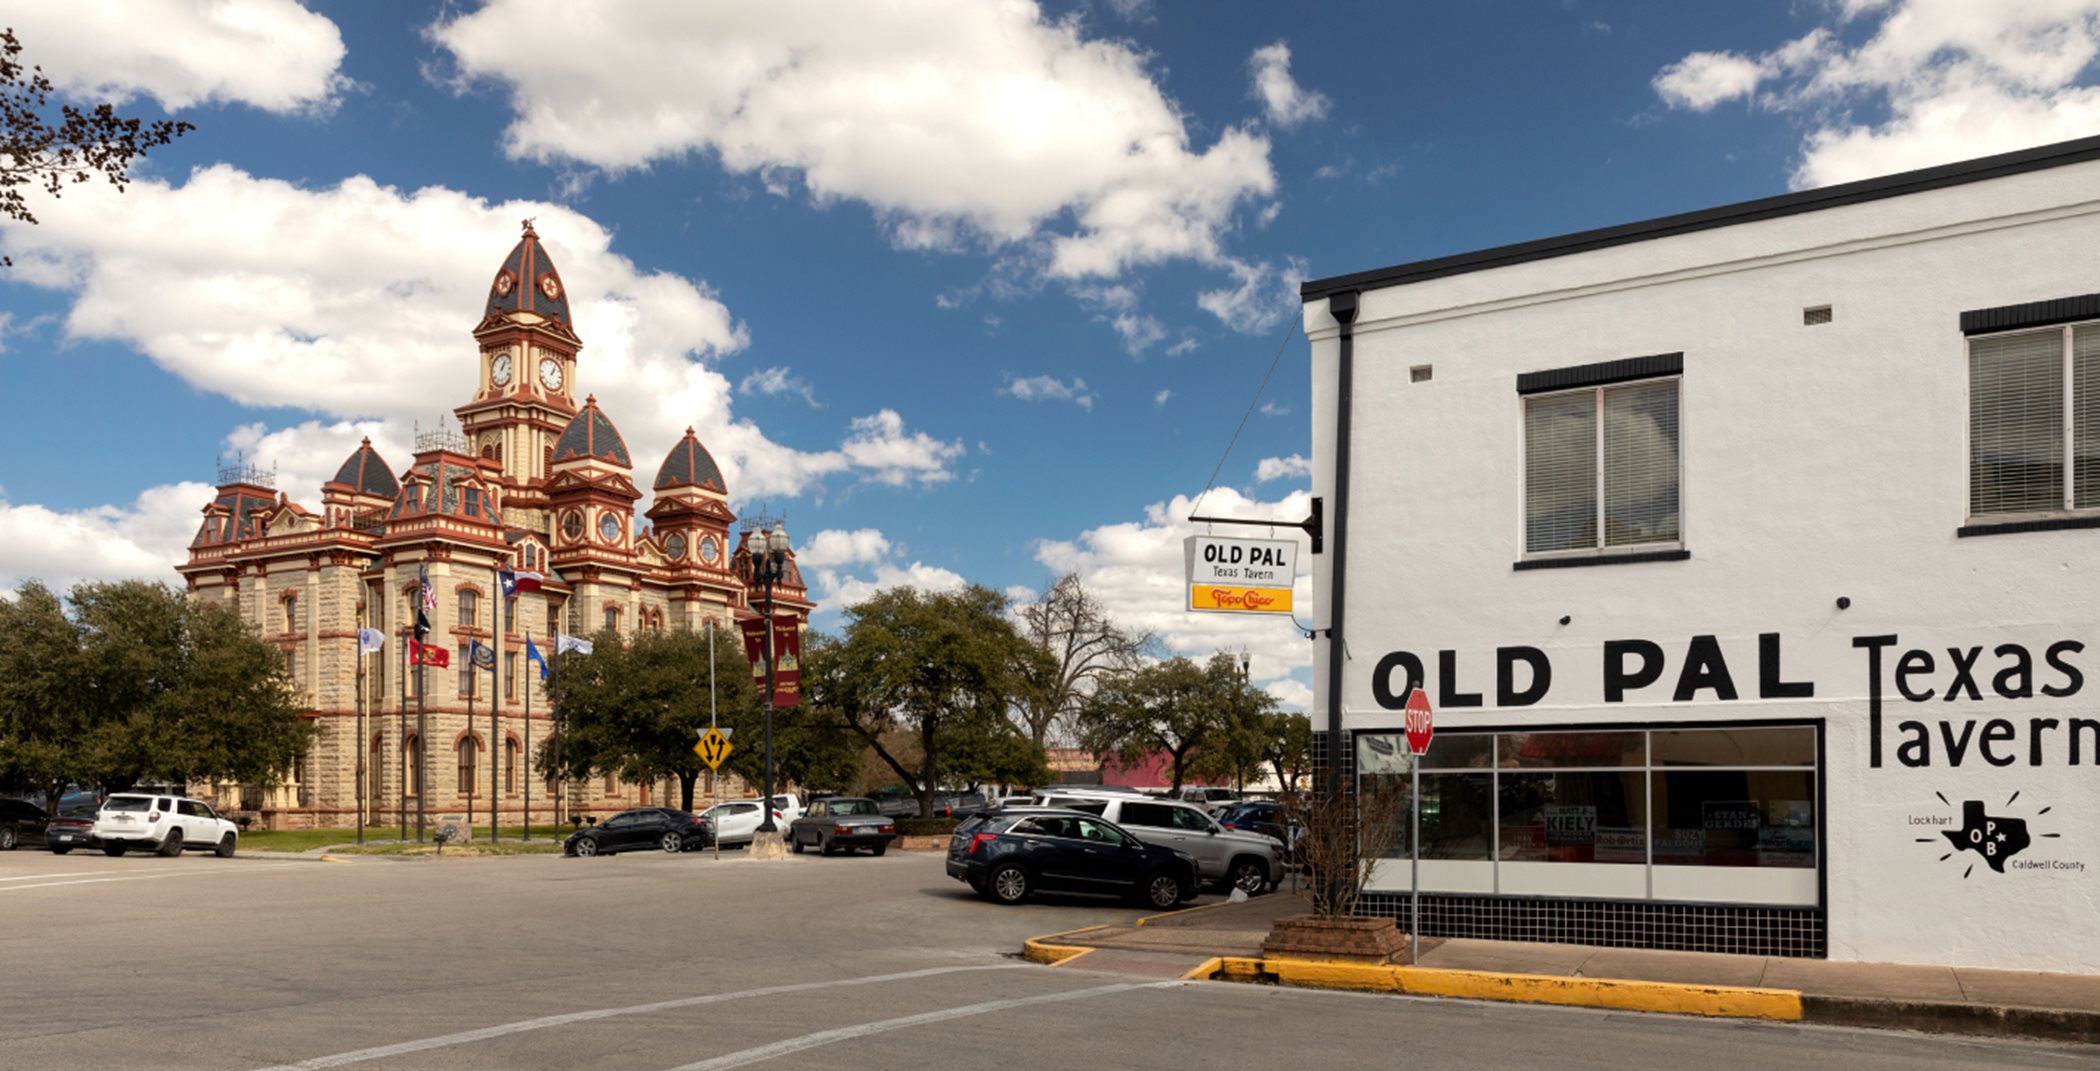  Old Pal Texas Tavern